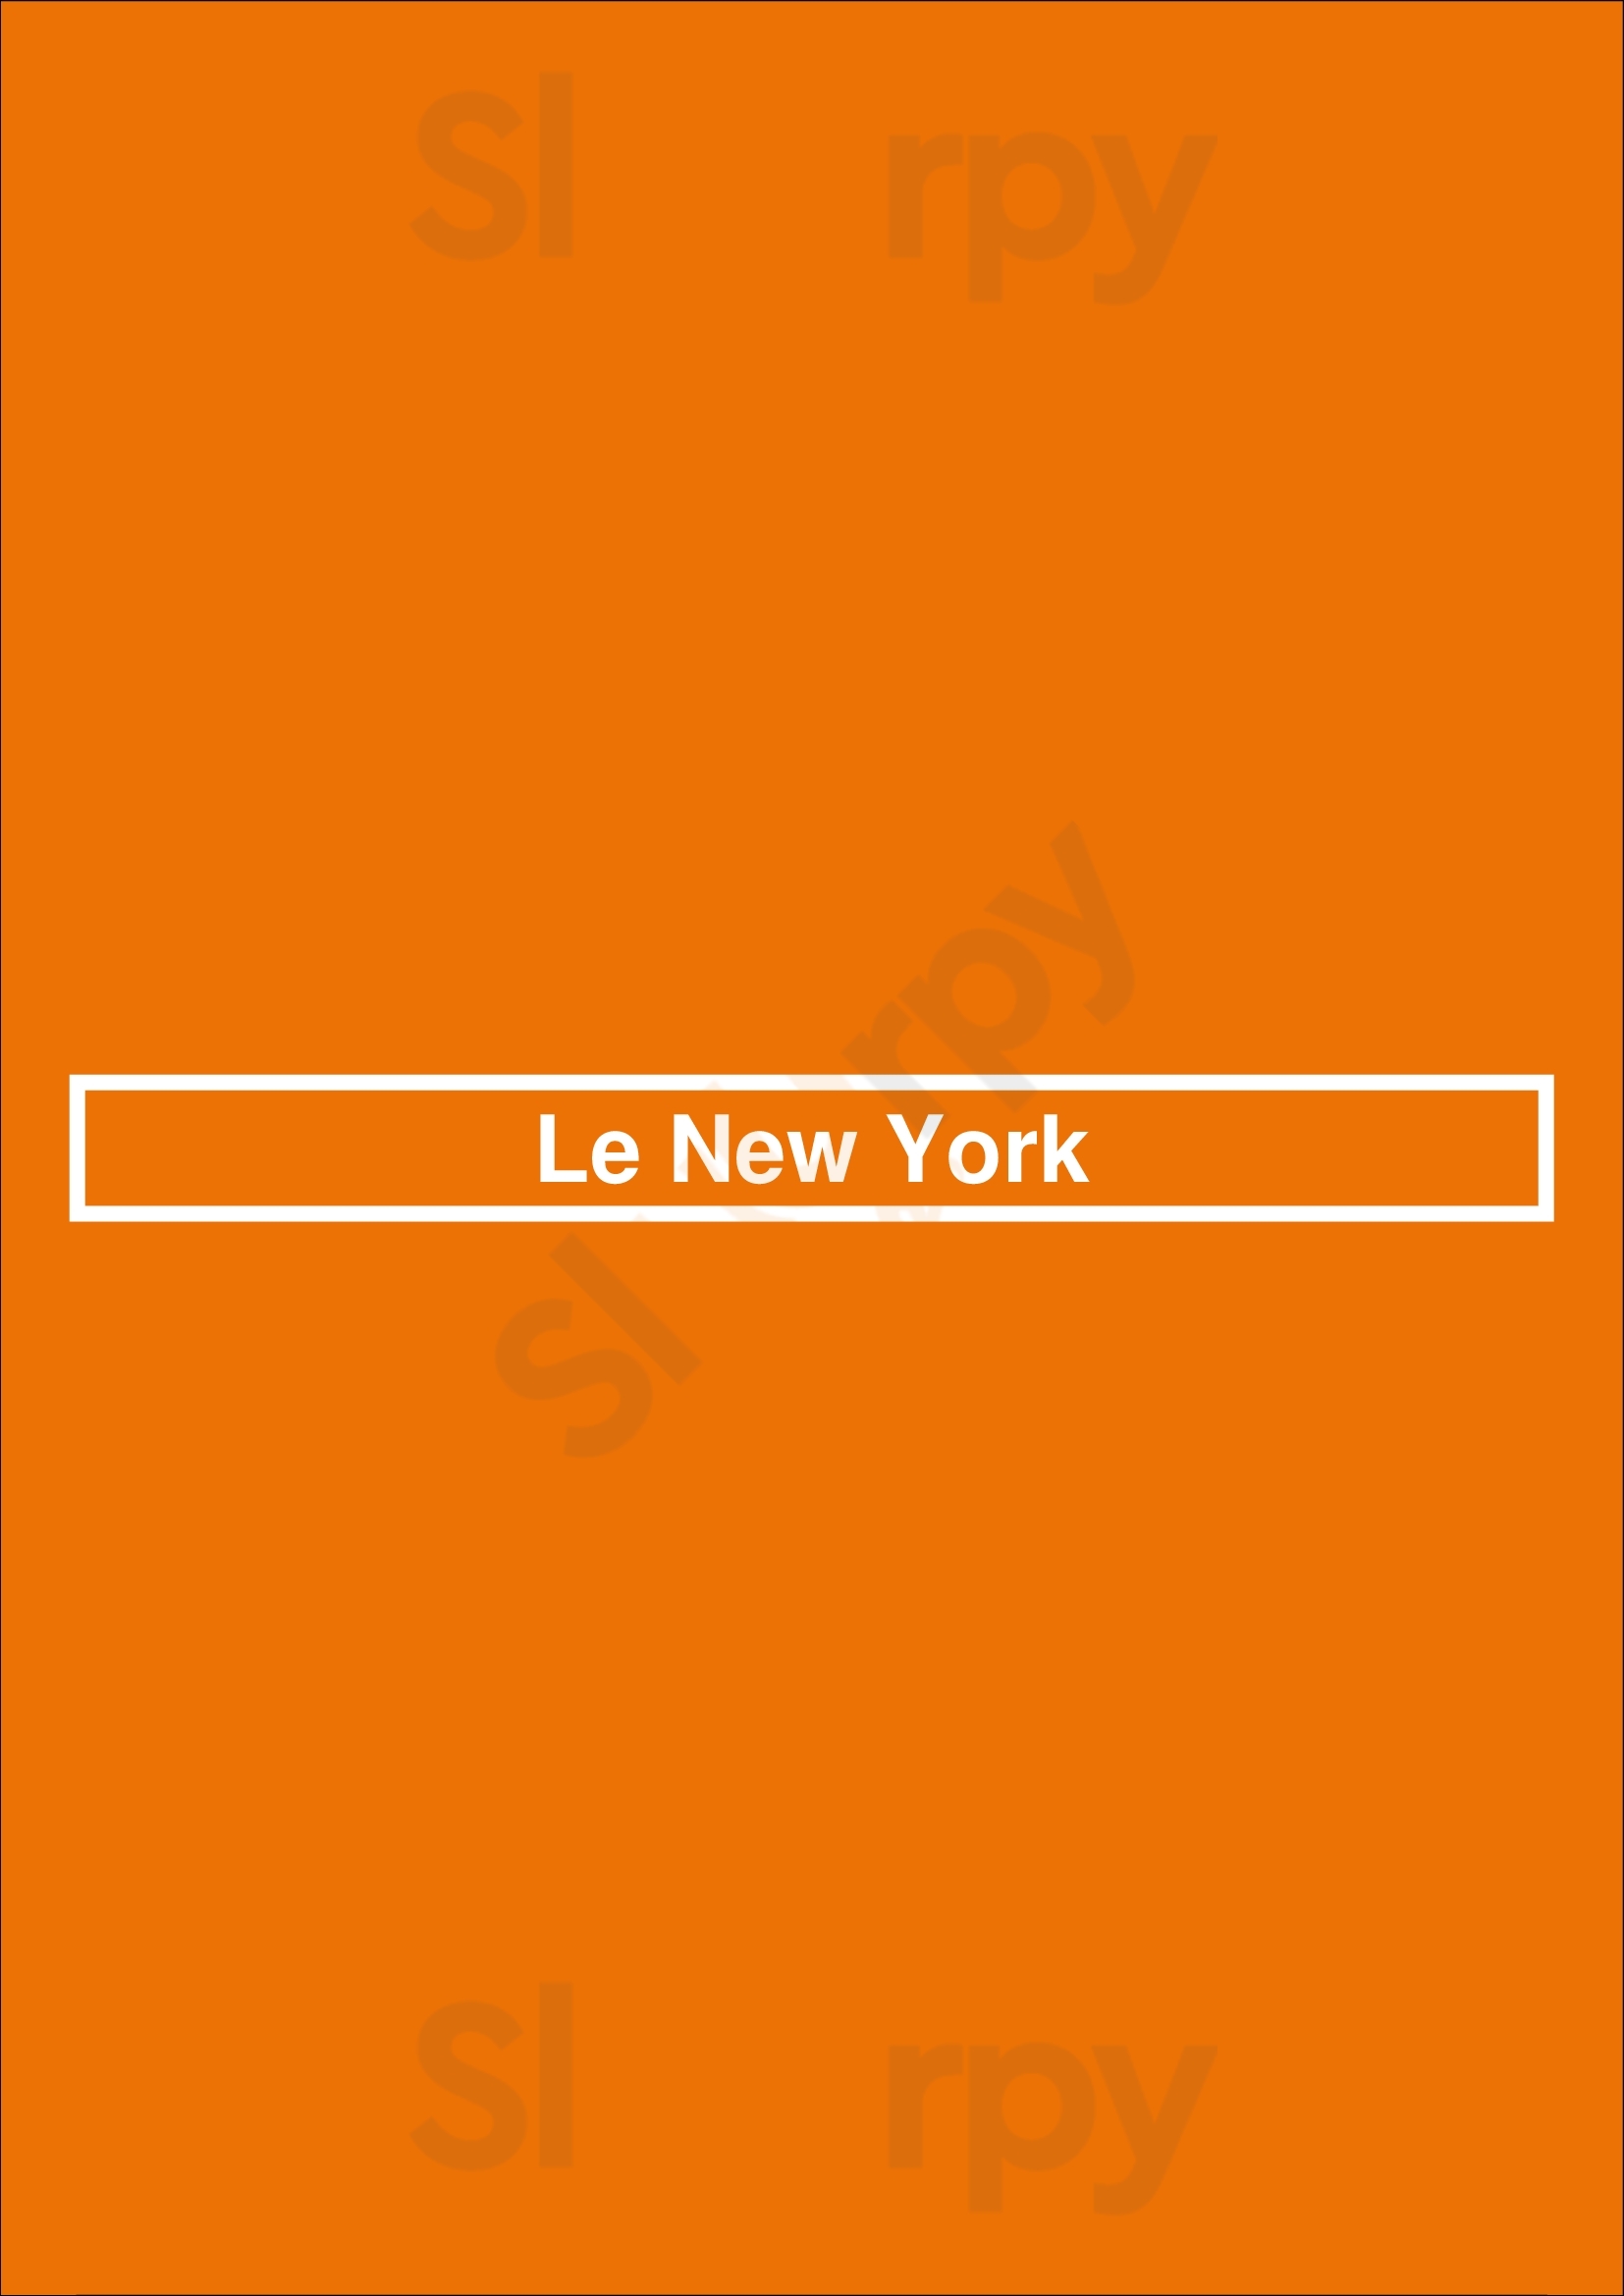 Le New York Paris Menu - 1